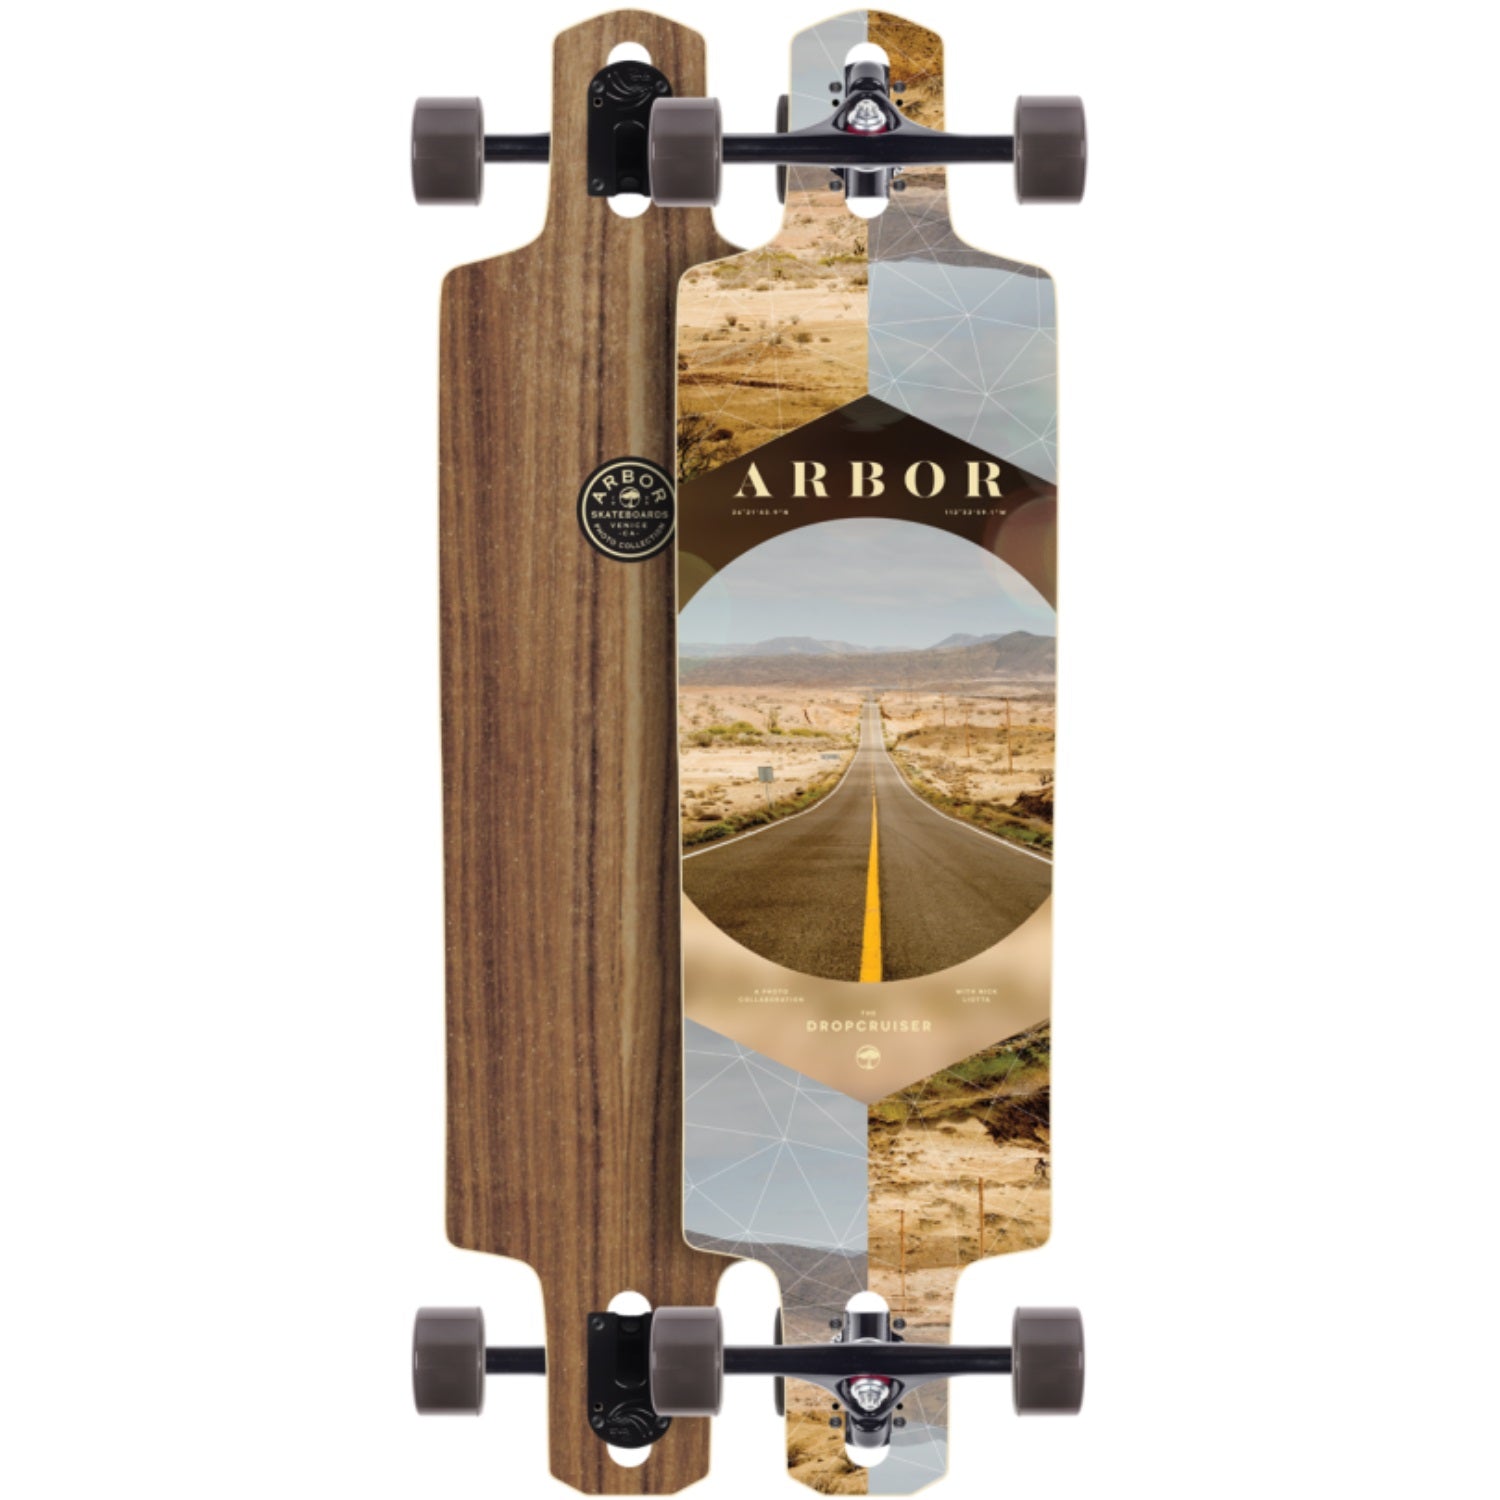 Arbor Dropcruiser Longboard Complete [All Series]